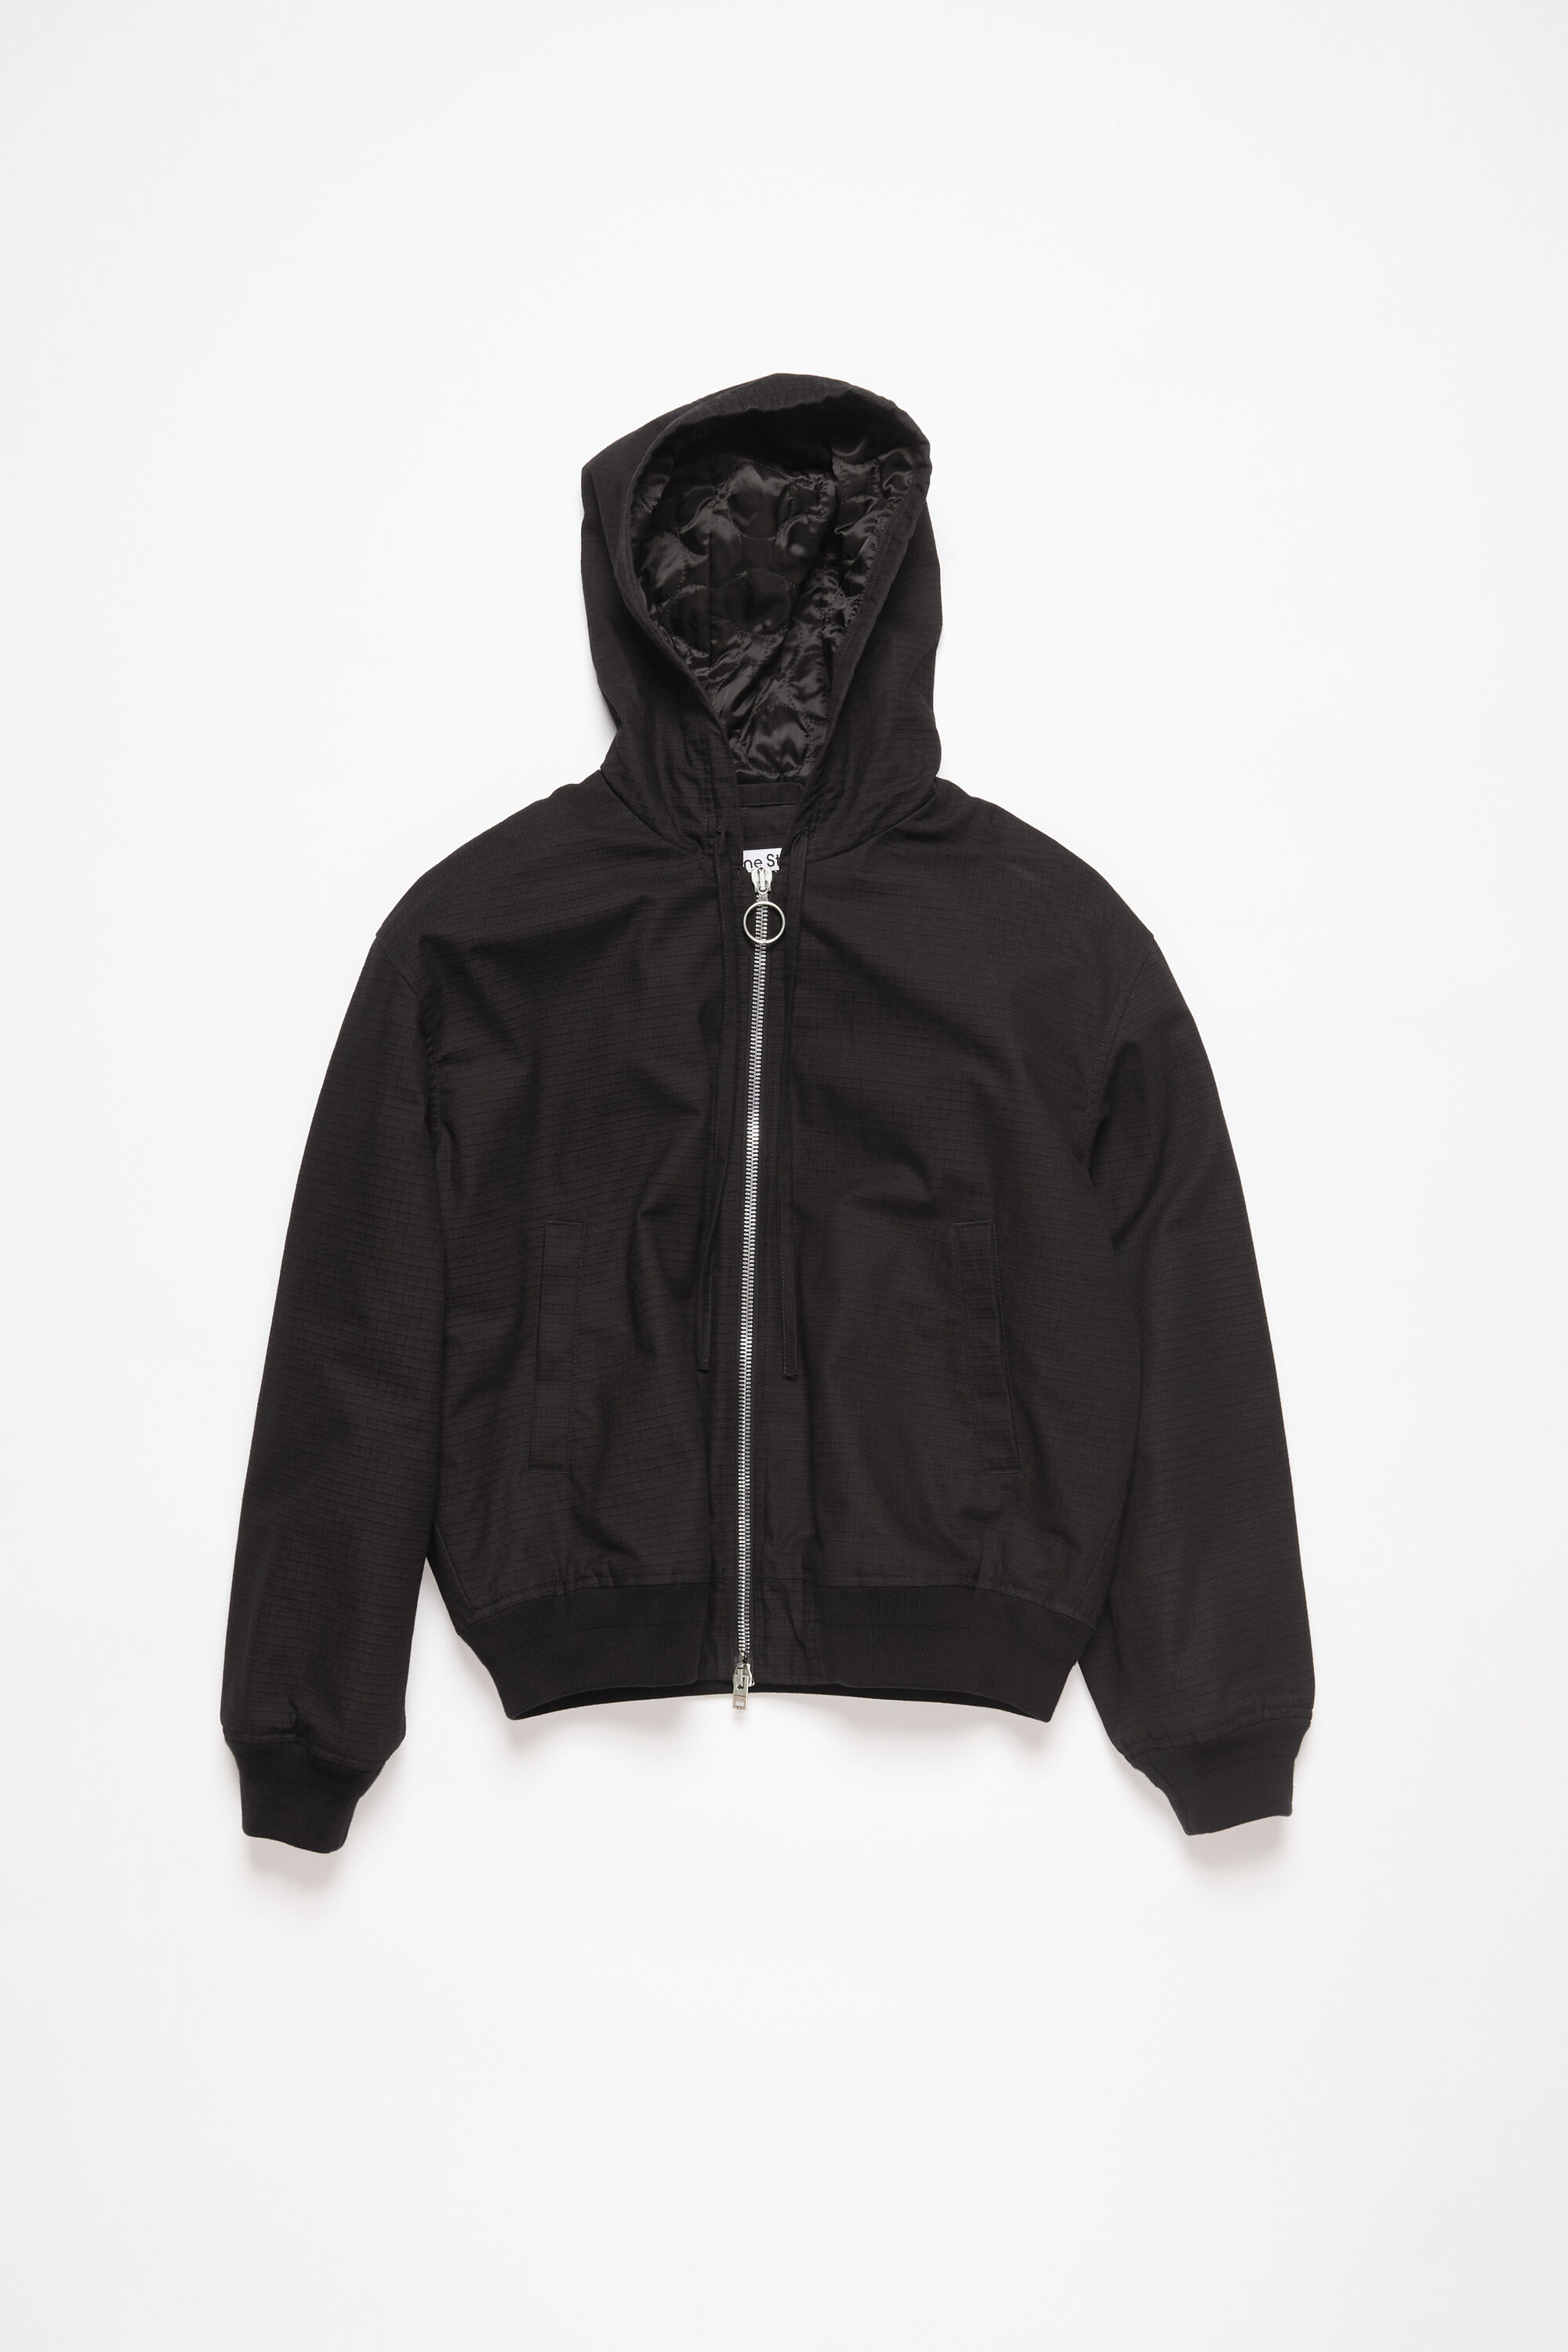 Acne Studios - Ripstop padded jacket - Black